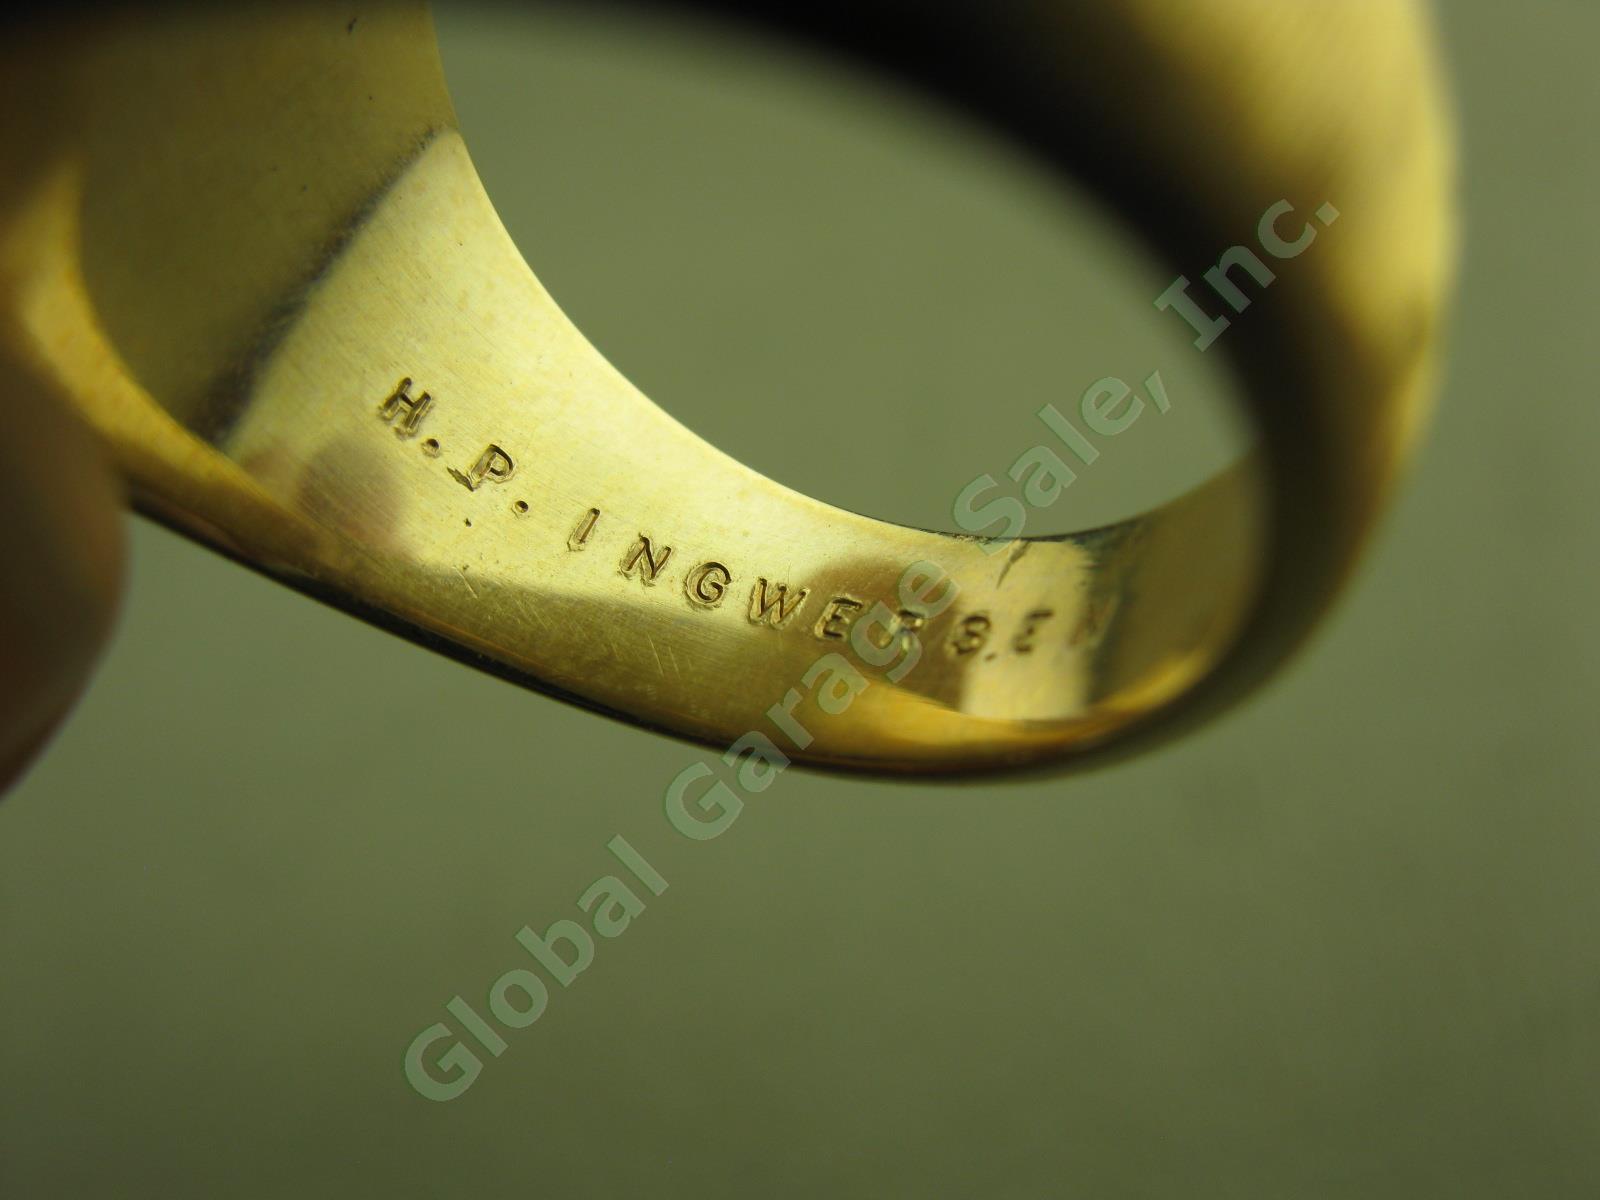 Snap-On Tools Dealer Sales Award 10K Gold Ring W/3 Diamonds 20.5 Gram Size 10.75 4